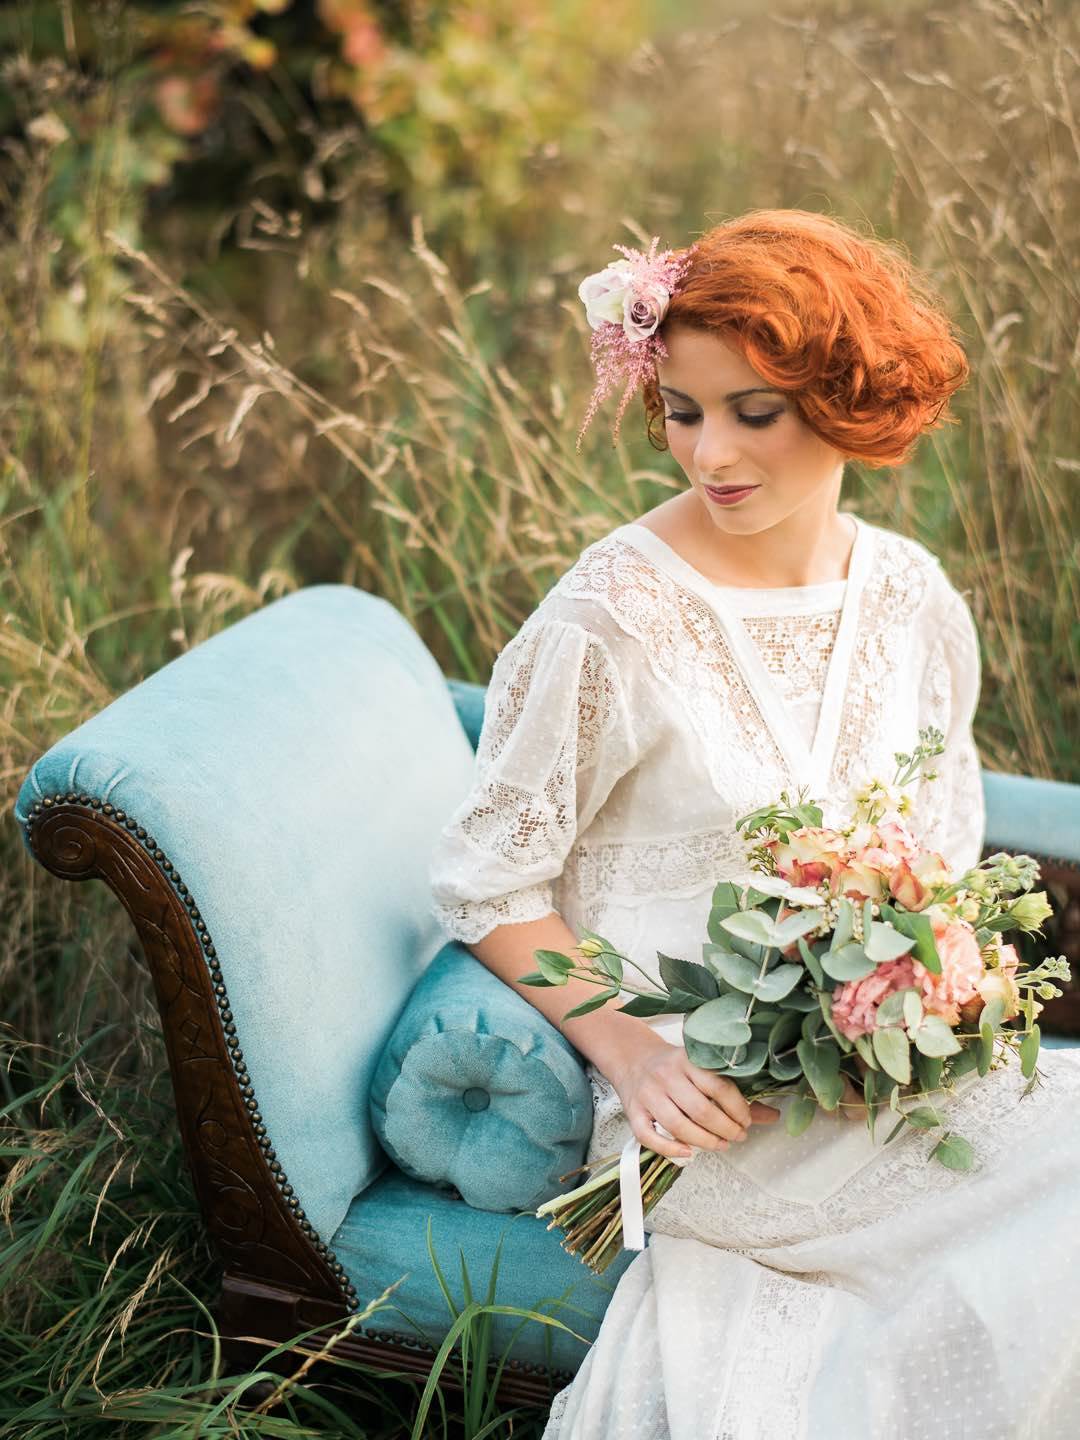 Heartfekt Vintage Wedding Dresses as featured on the National Vintage Wedding Fair blog